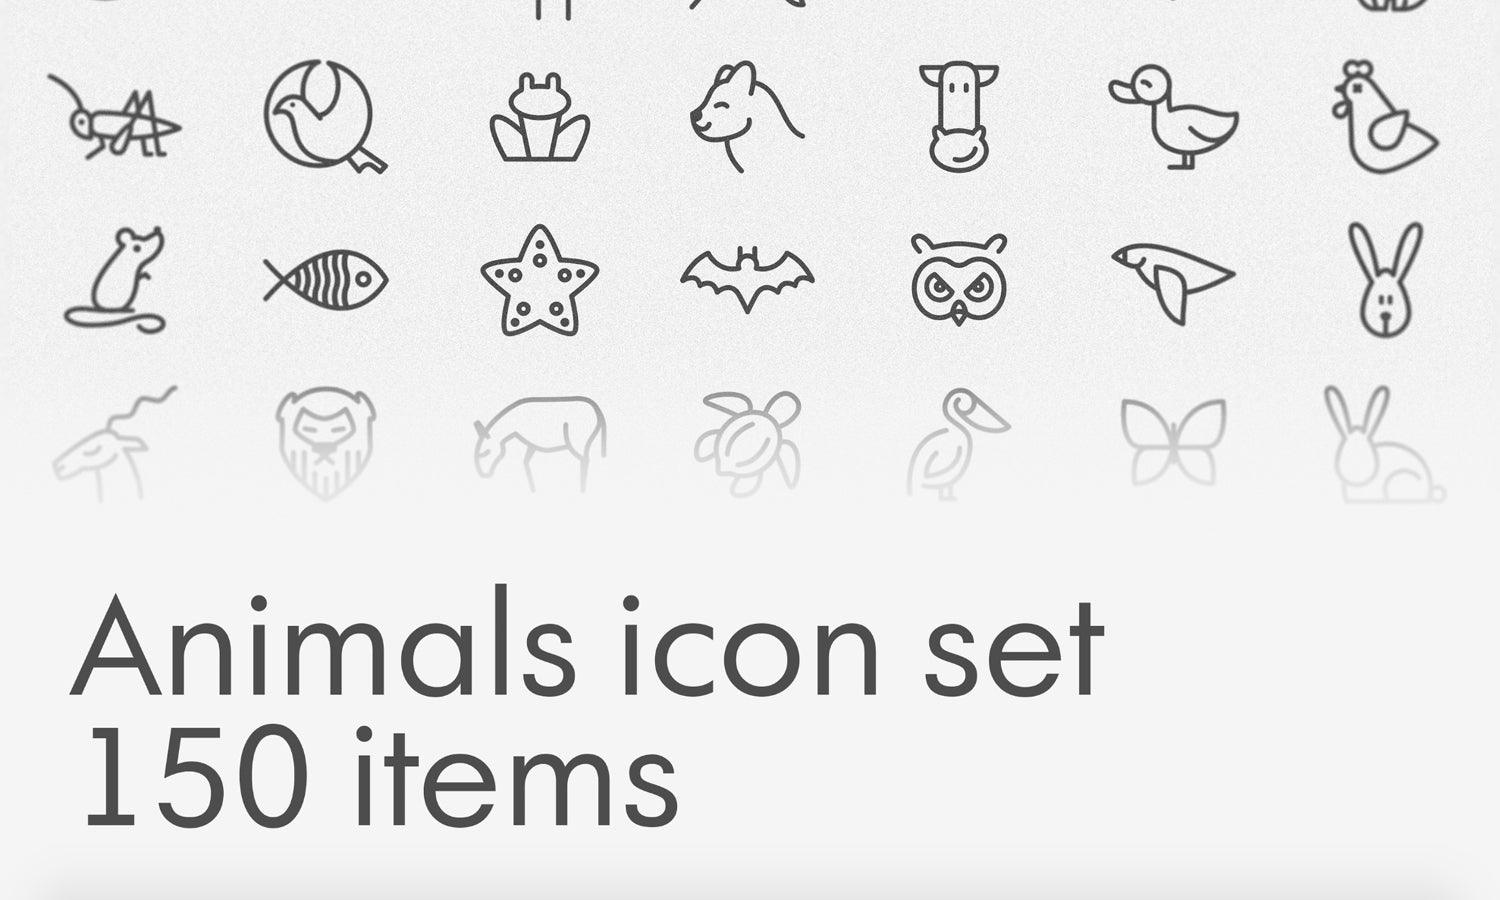 Animals Icon Set - Free Icons - Kreafolk